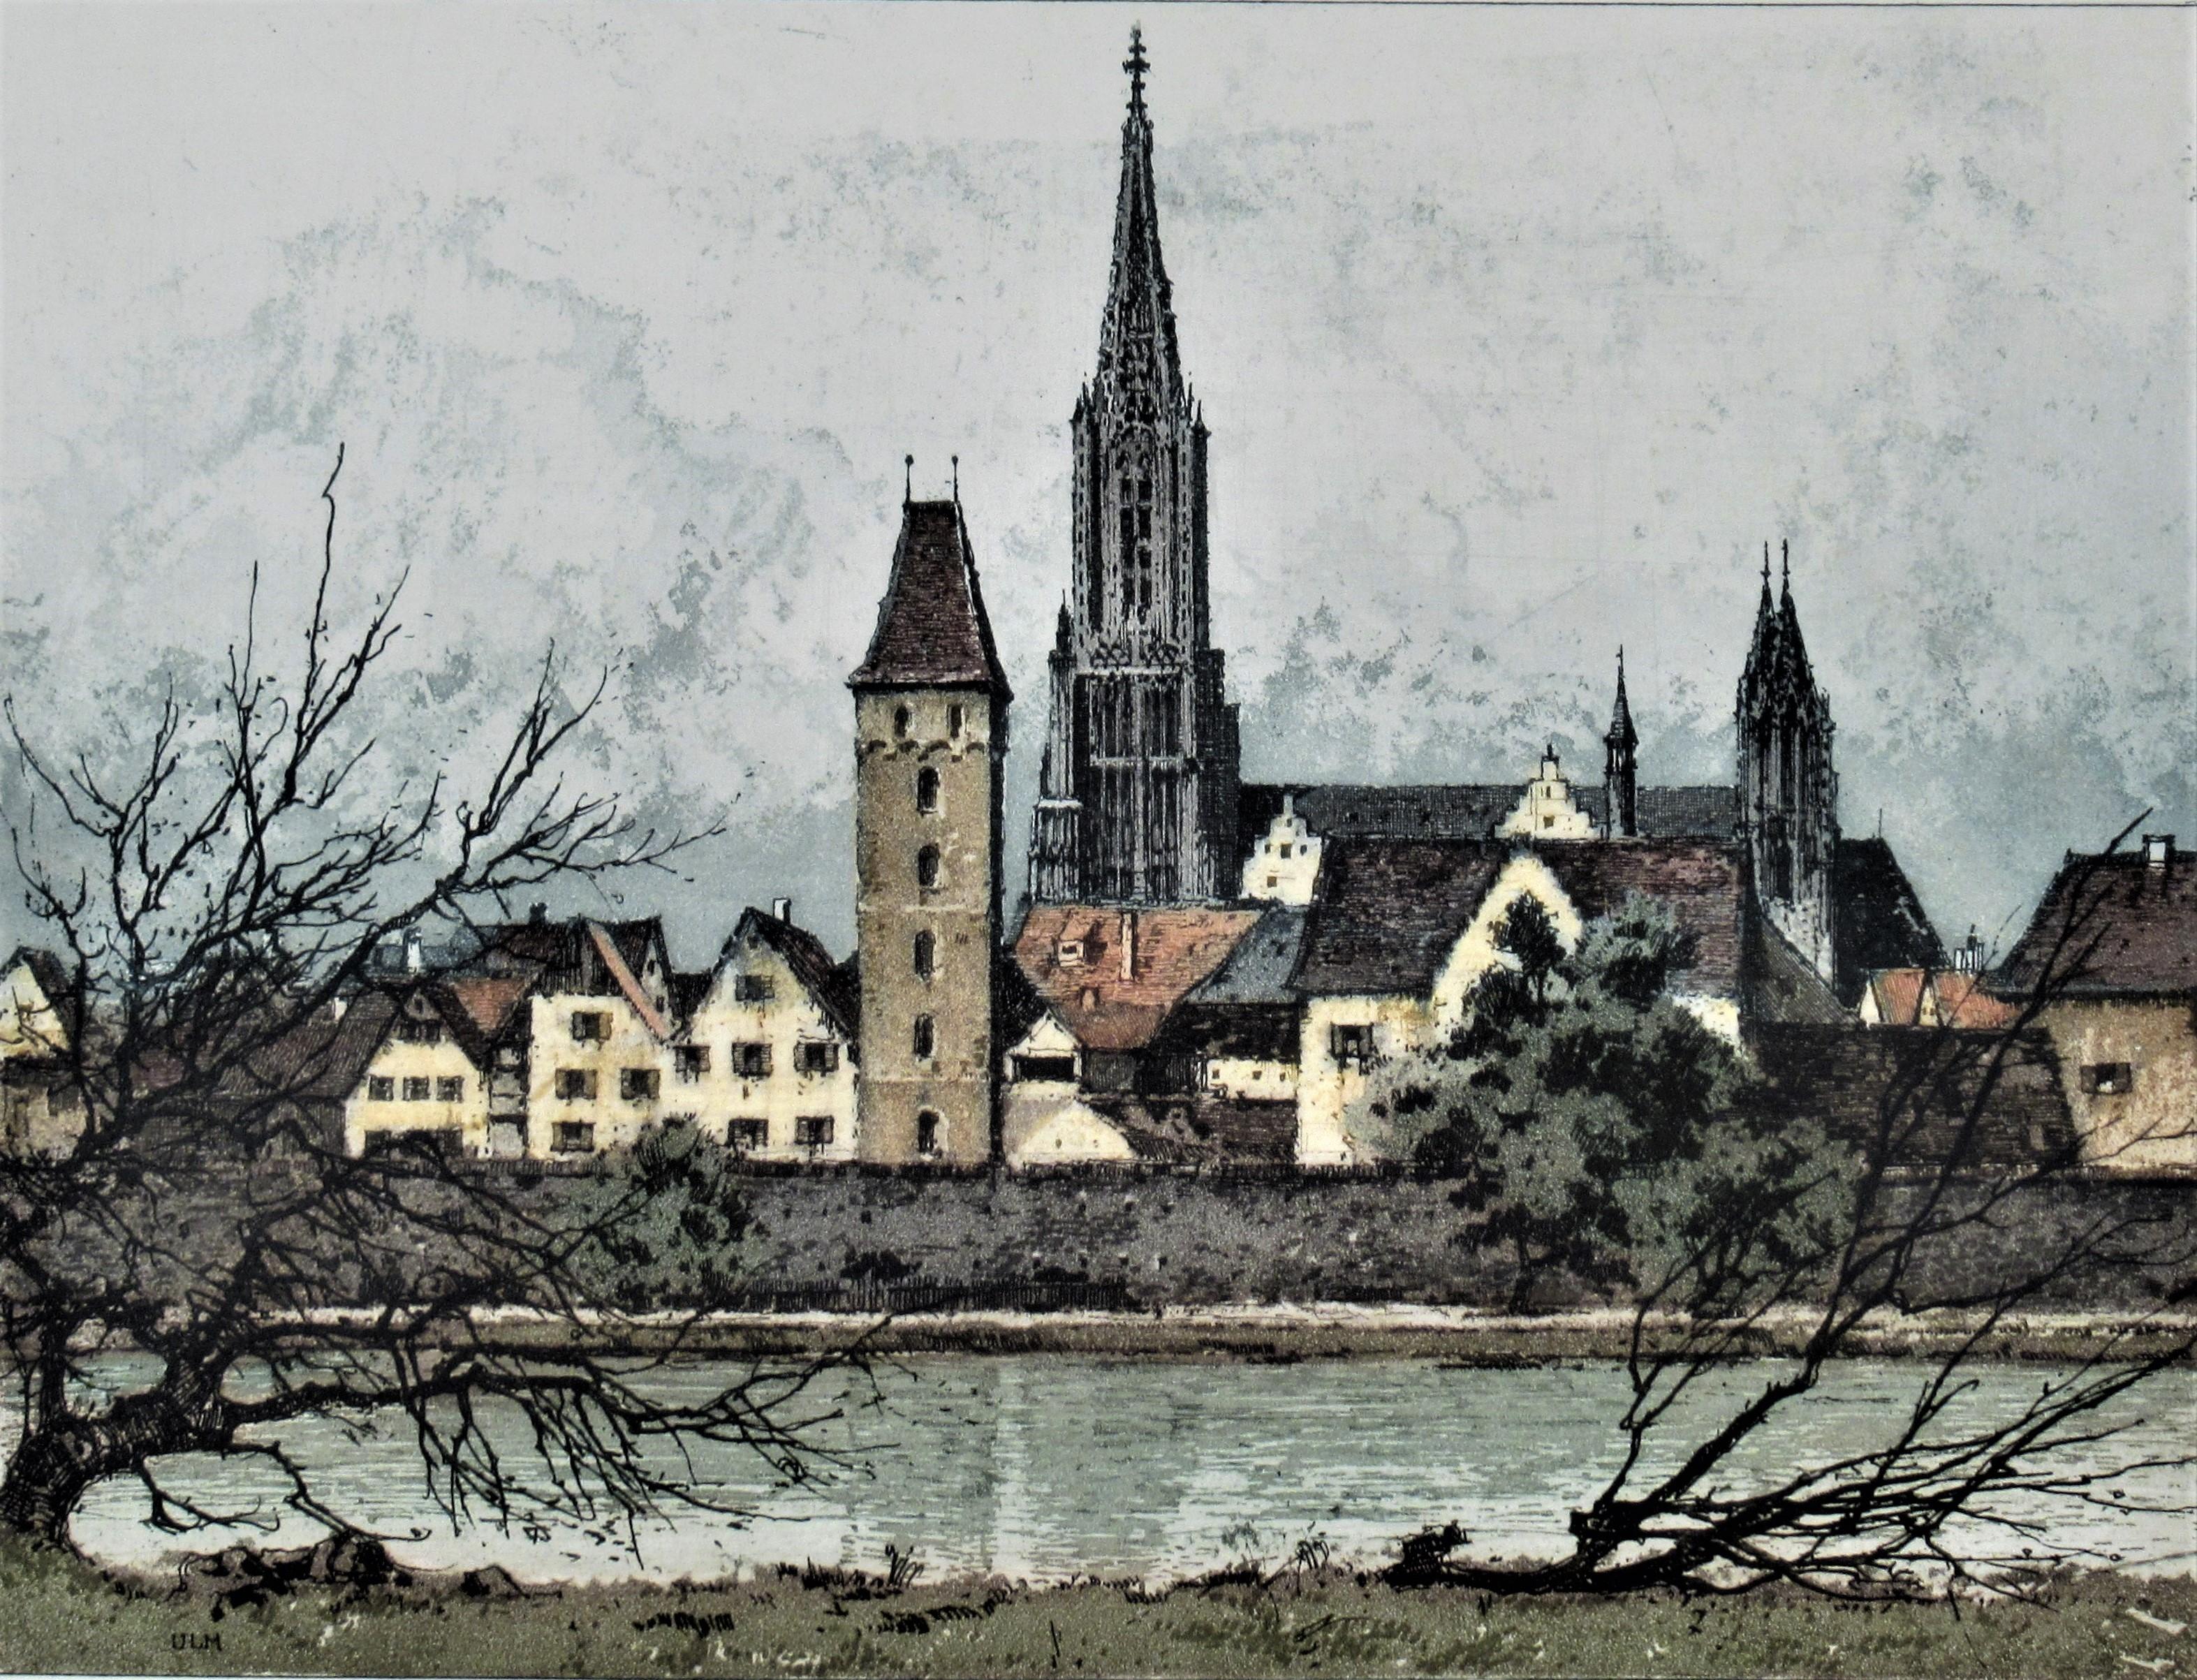 Ulm on the Danube - Print by Josef Eidenberger